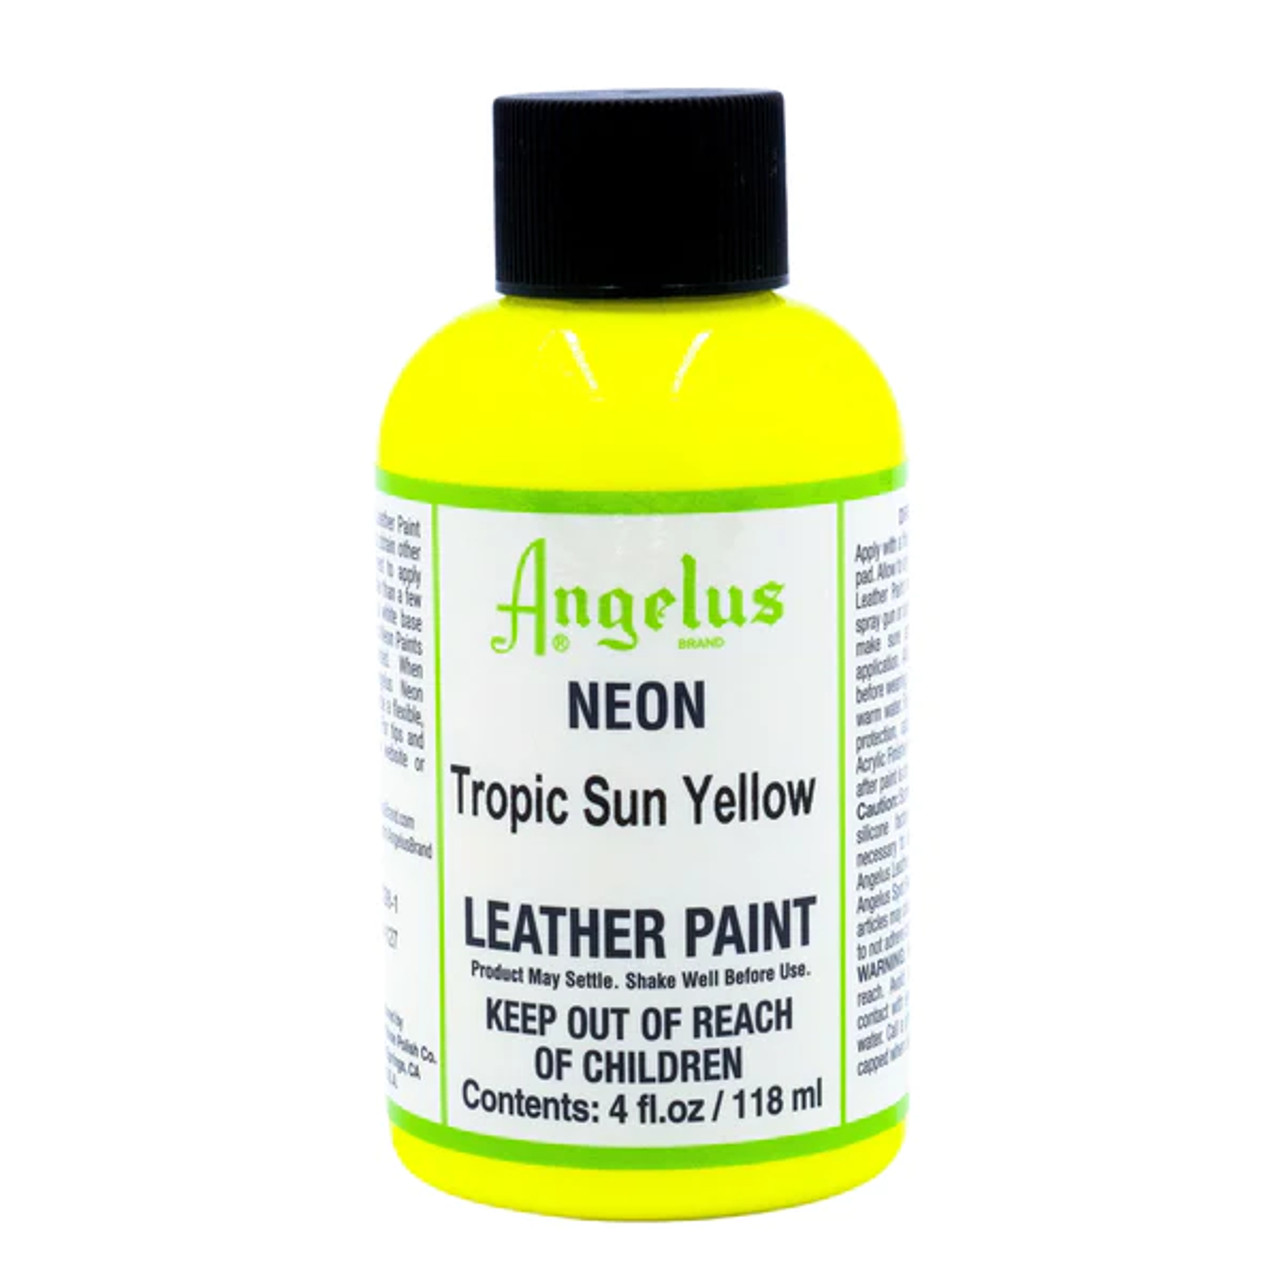 Angelus Acrylic Leather Paint Yellow 1 oz